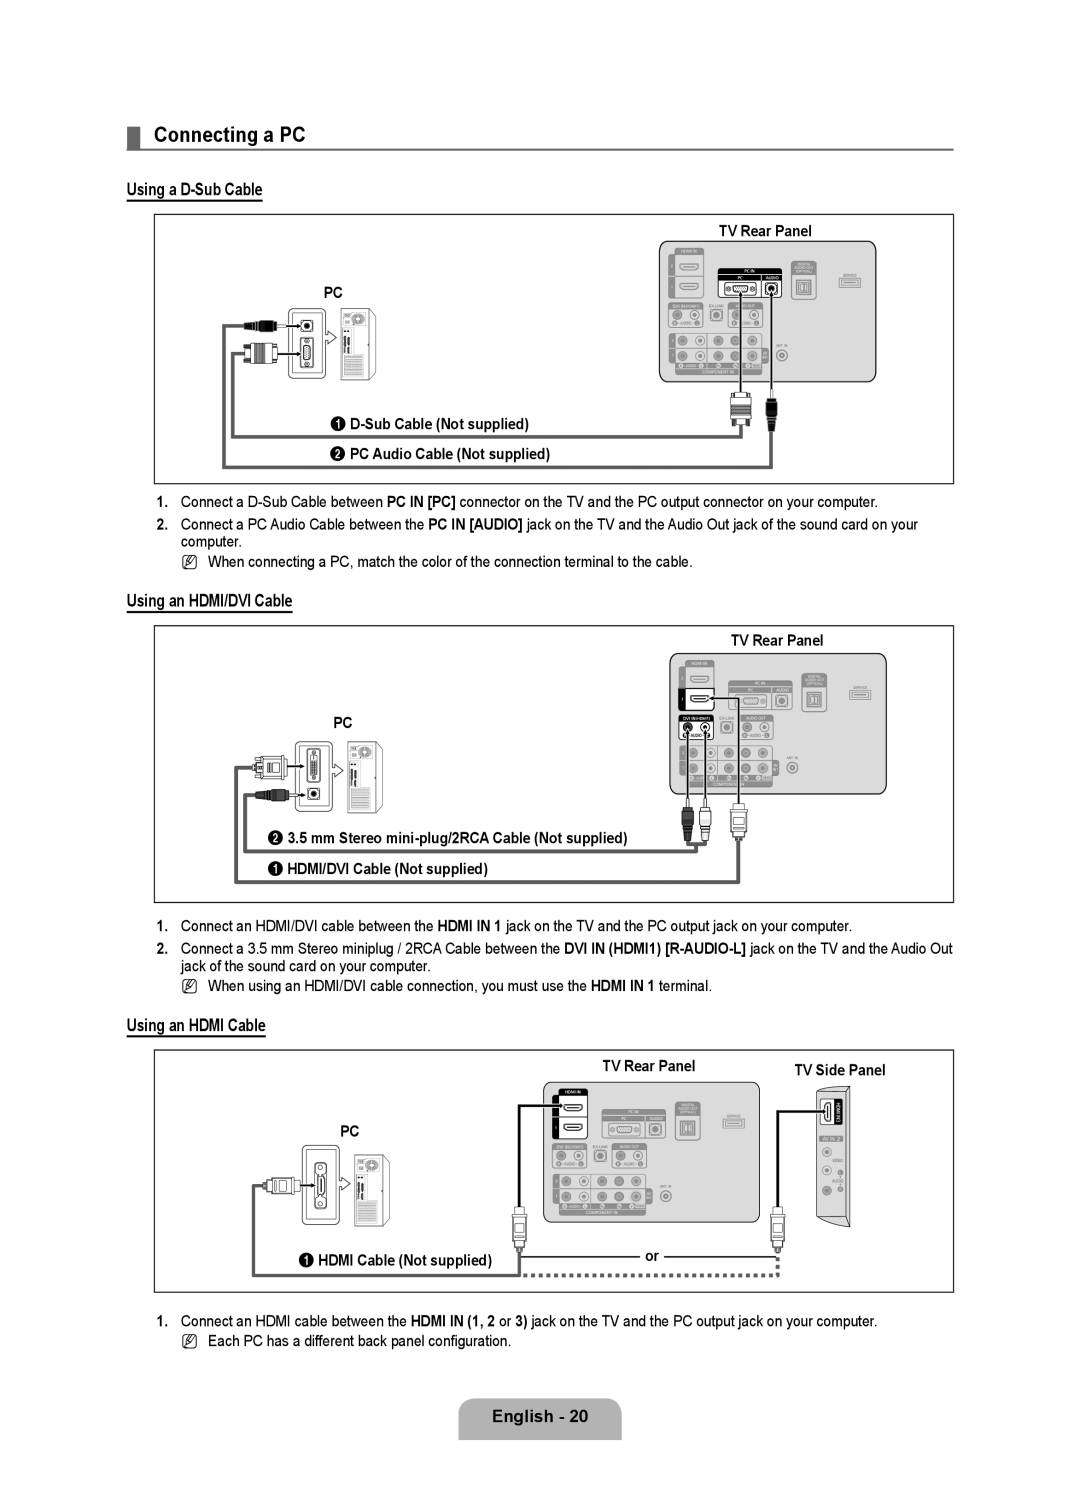 Samsung LN40B530, LN46B530, LN52B530, LN32B530, LN37B530 user manual TV Rear Panel 